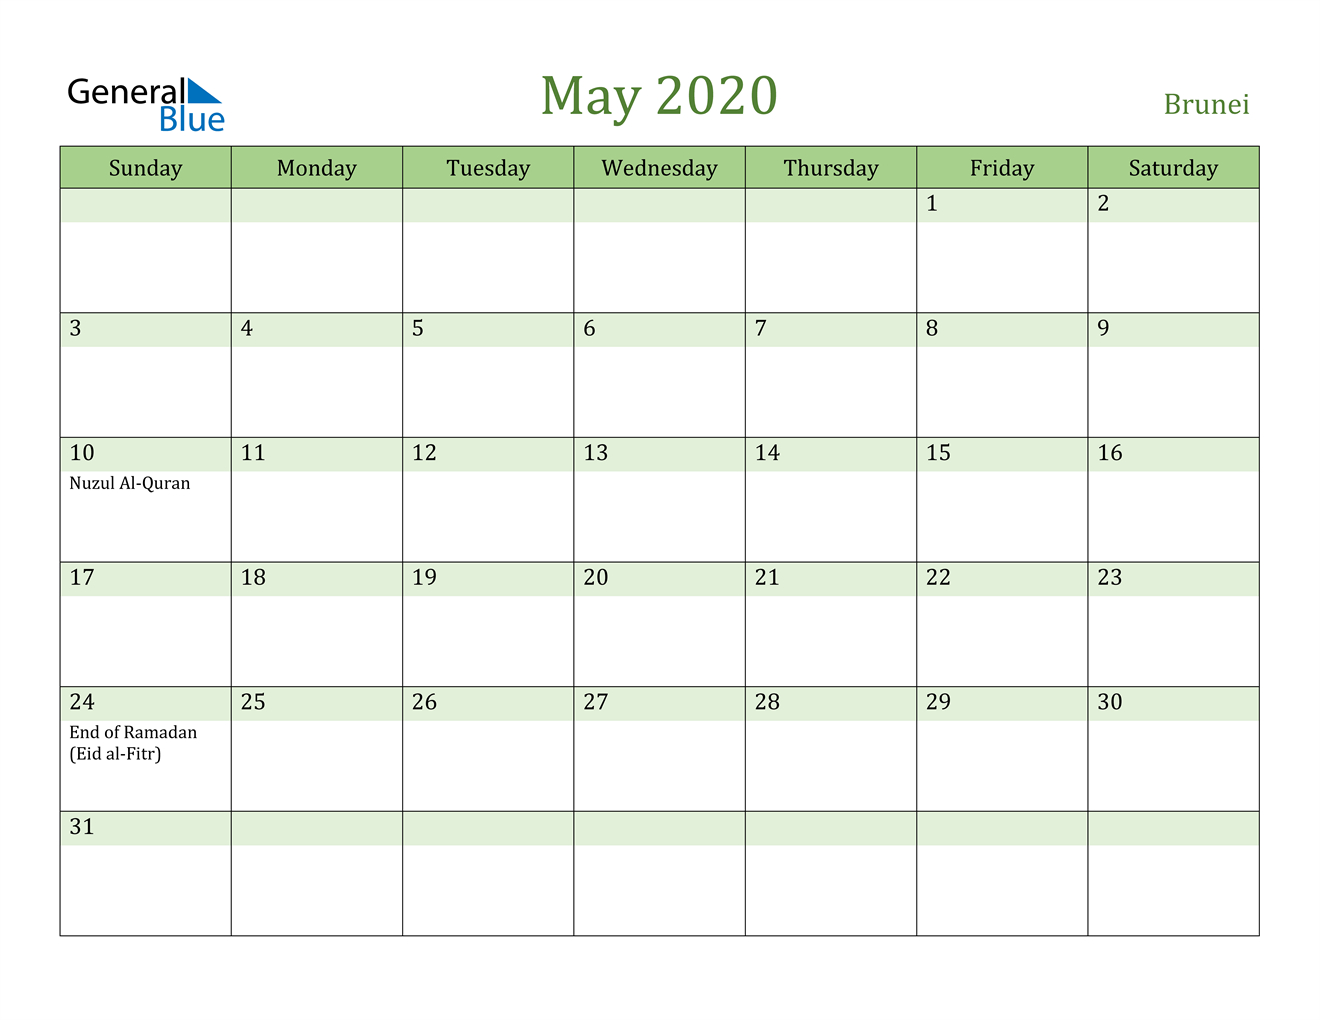 May 2020 Calendar - Brunei